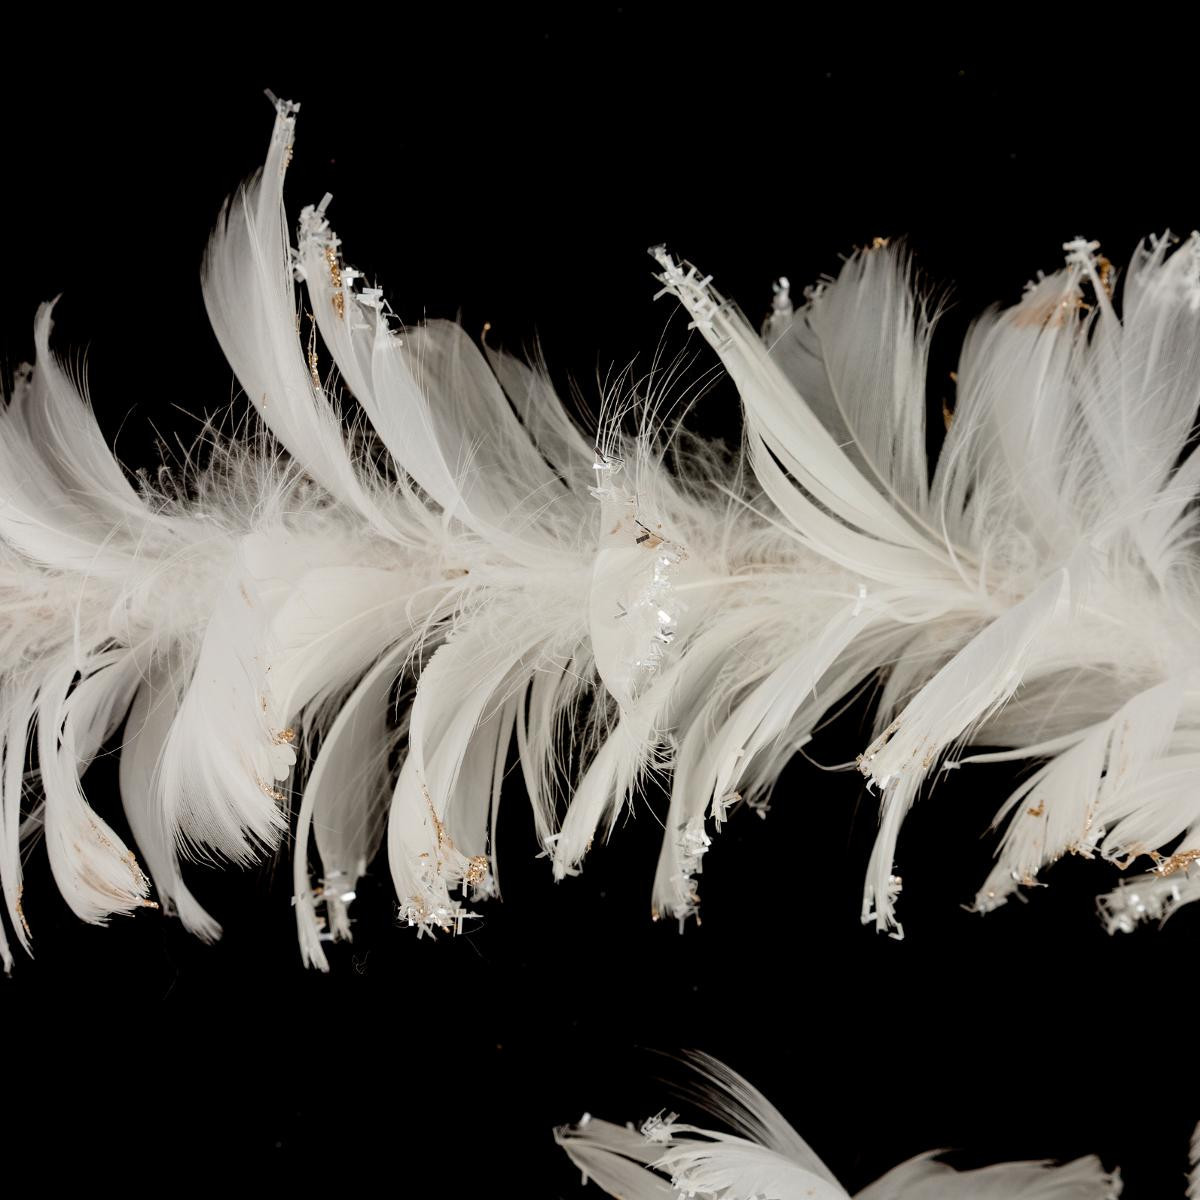 Guirlande plumes blanche l180xd15cm